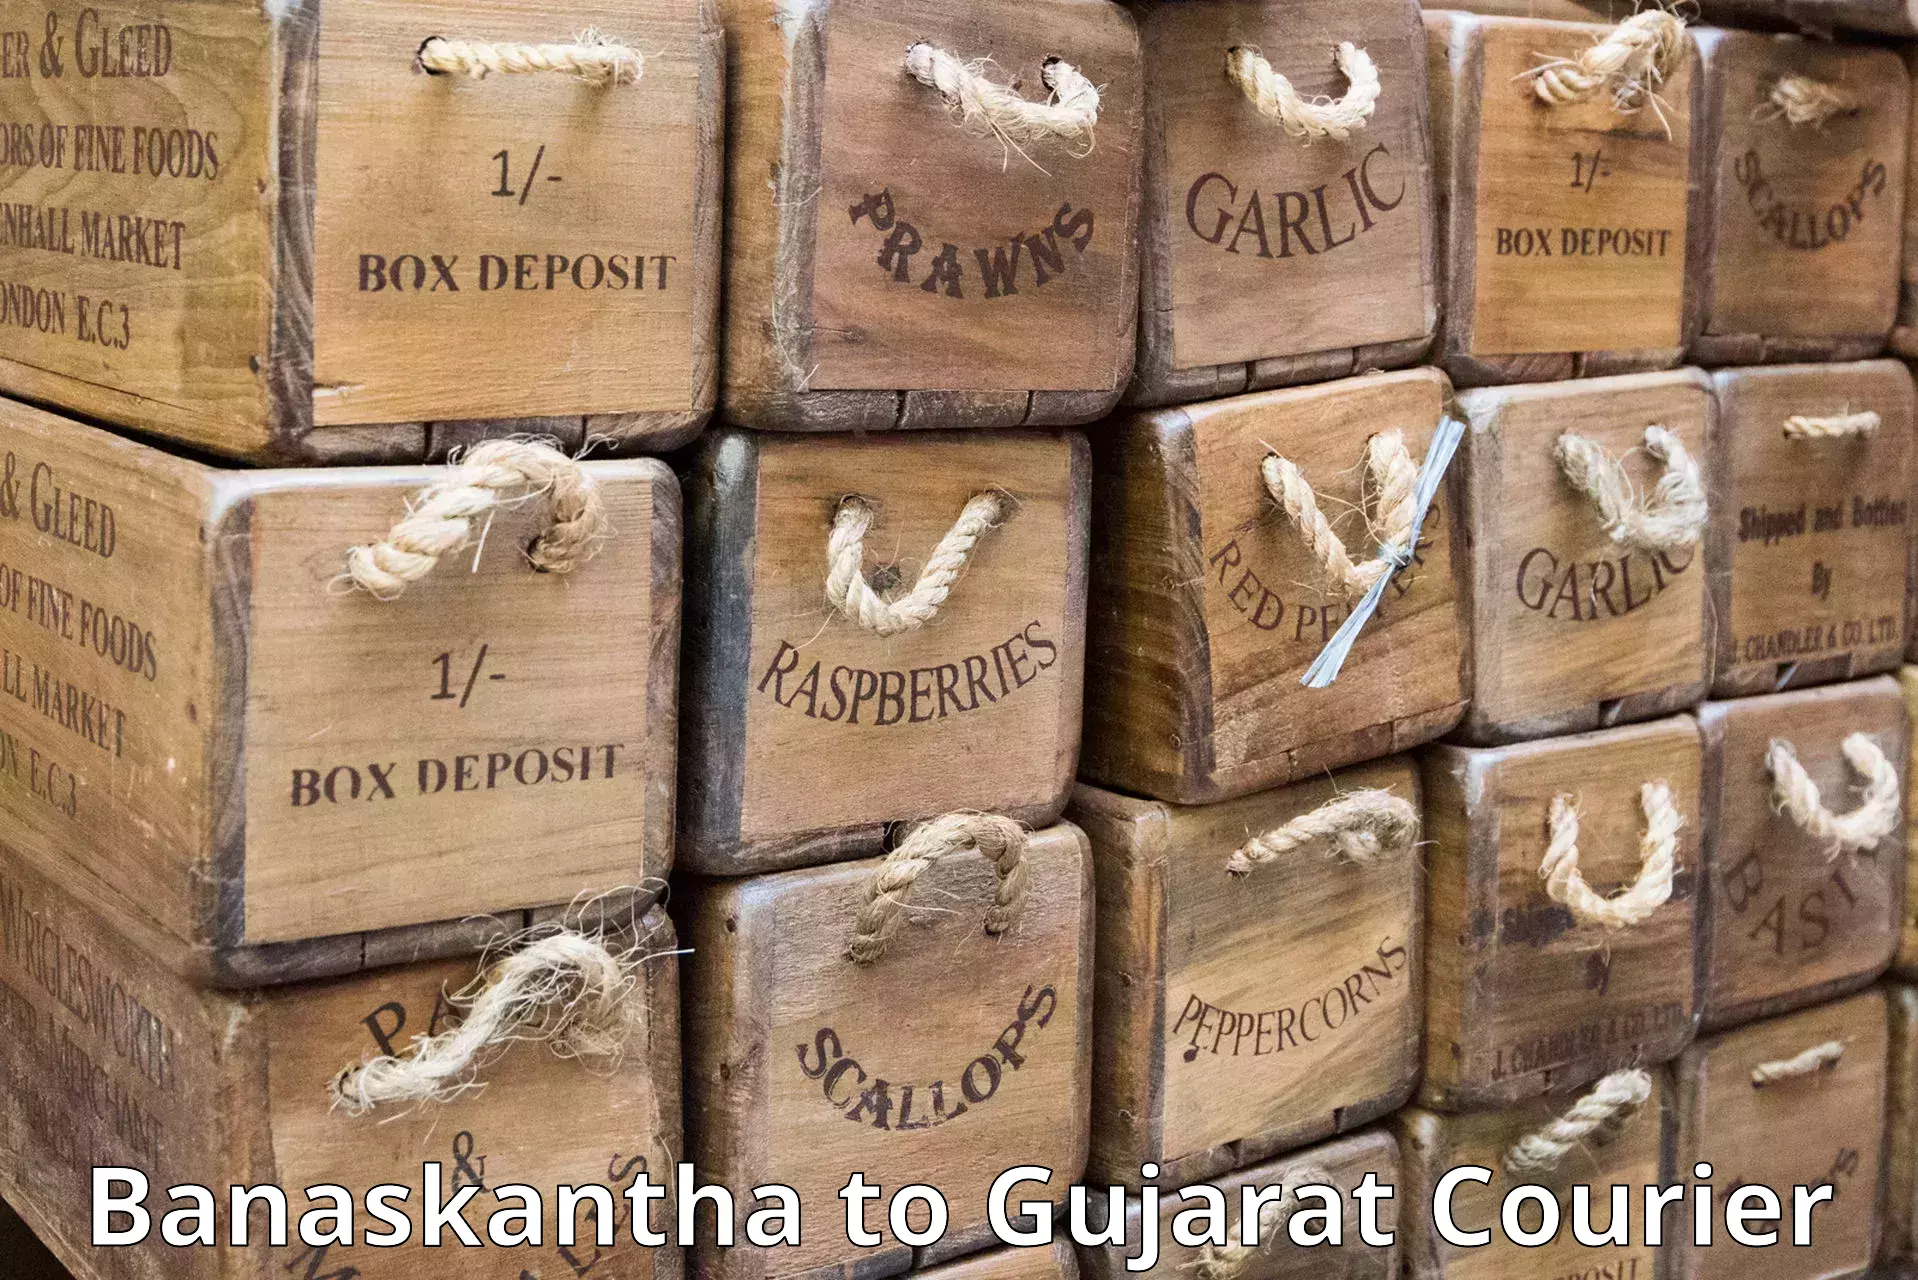 International courier networks Banaskantha to Narmada Gujarat